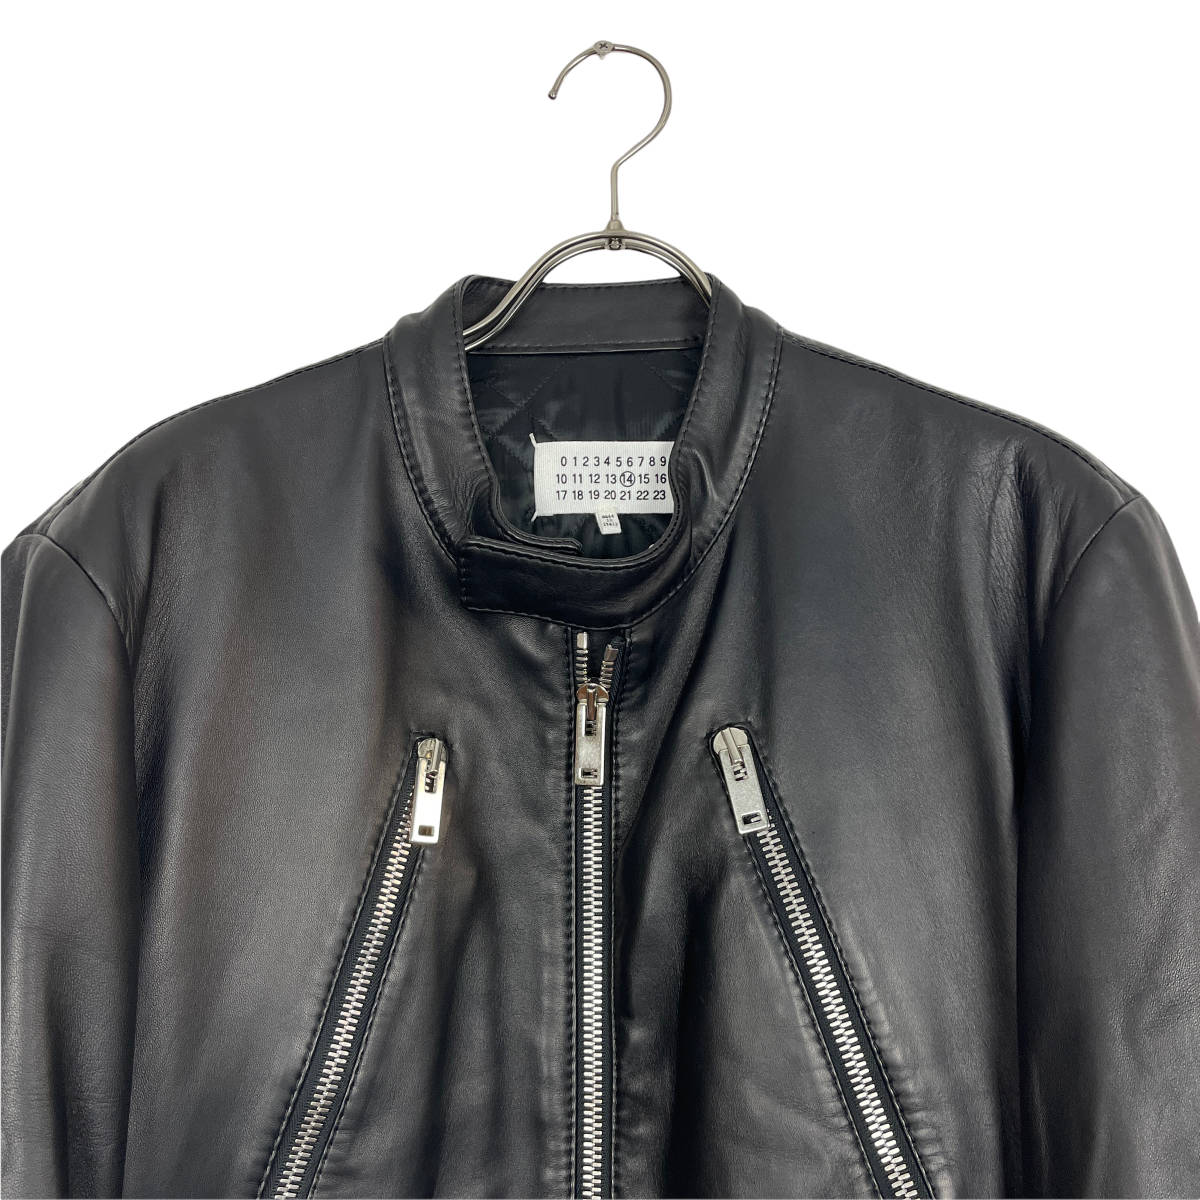 Maison Margiela(メゾン マルジェラ) 八の字 leather jacket 2015 (black)_画像2